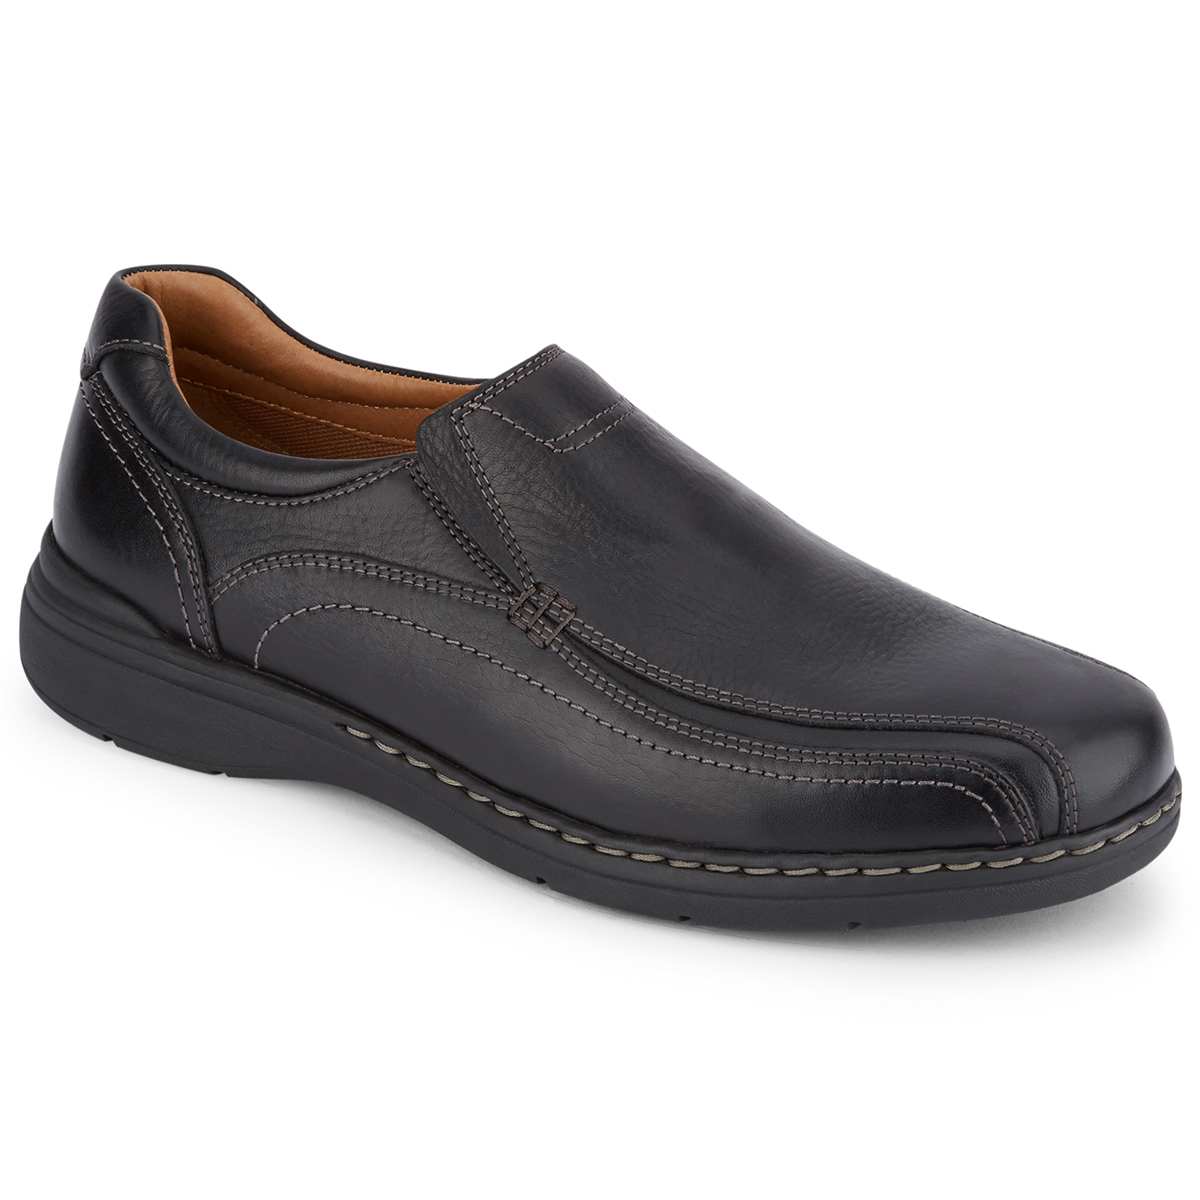 Dockers Men's Mosley Slip-On Shoe - Size 11.5